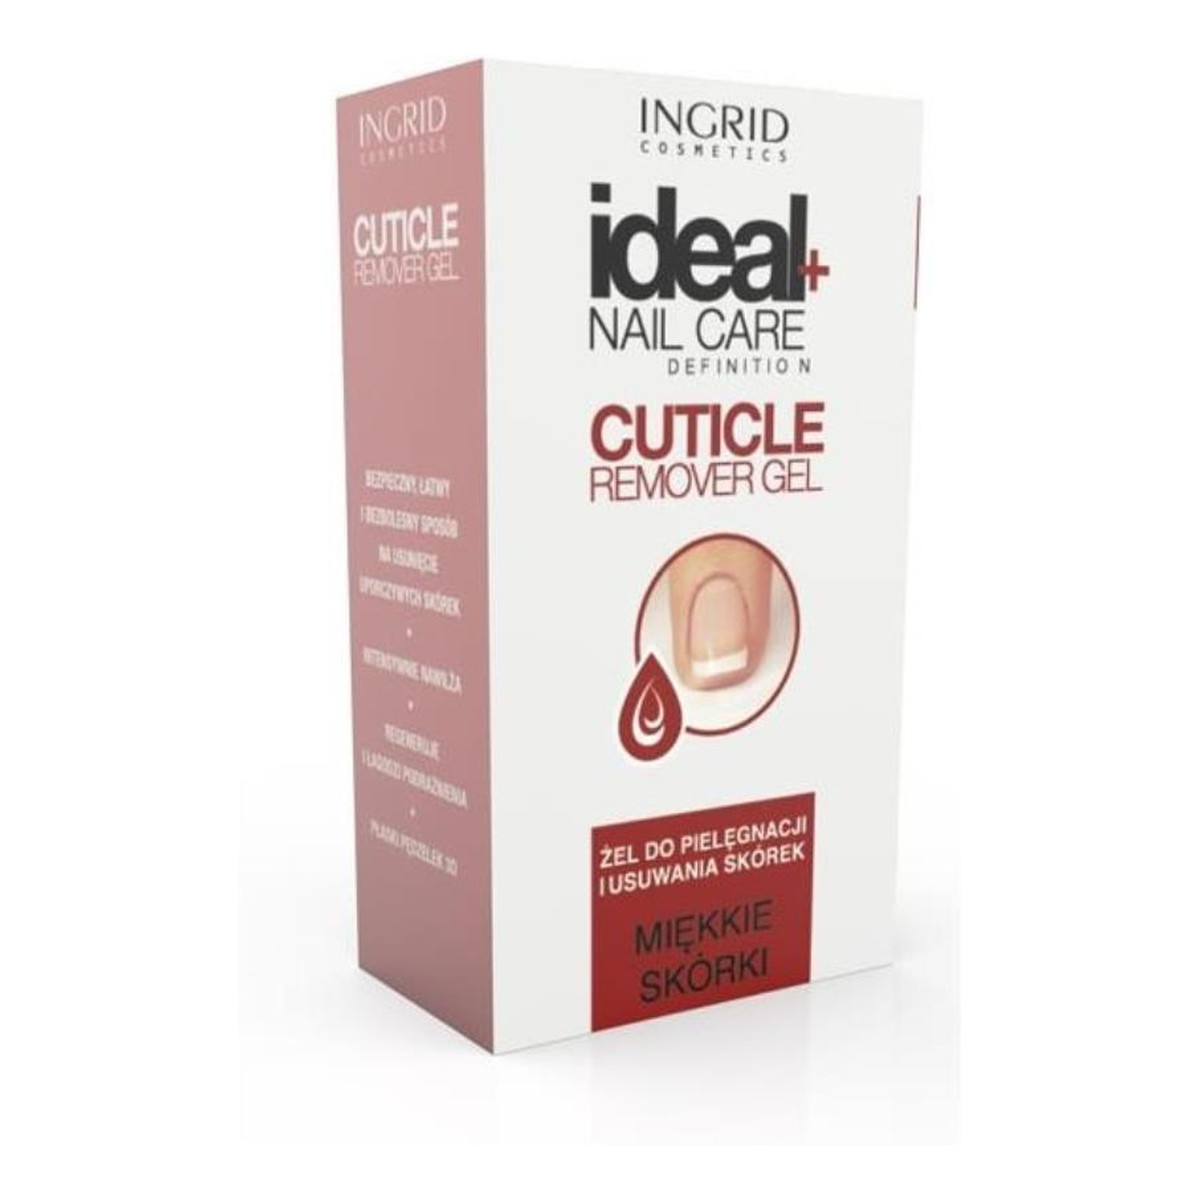 Ingrid Ideal Nail Care Definition Cuticle Remover Gel Żel Do Usuwania i Pielęgnacji Skórek 7ml